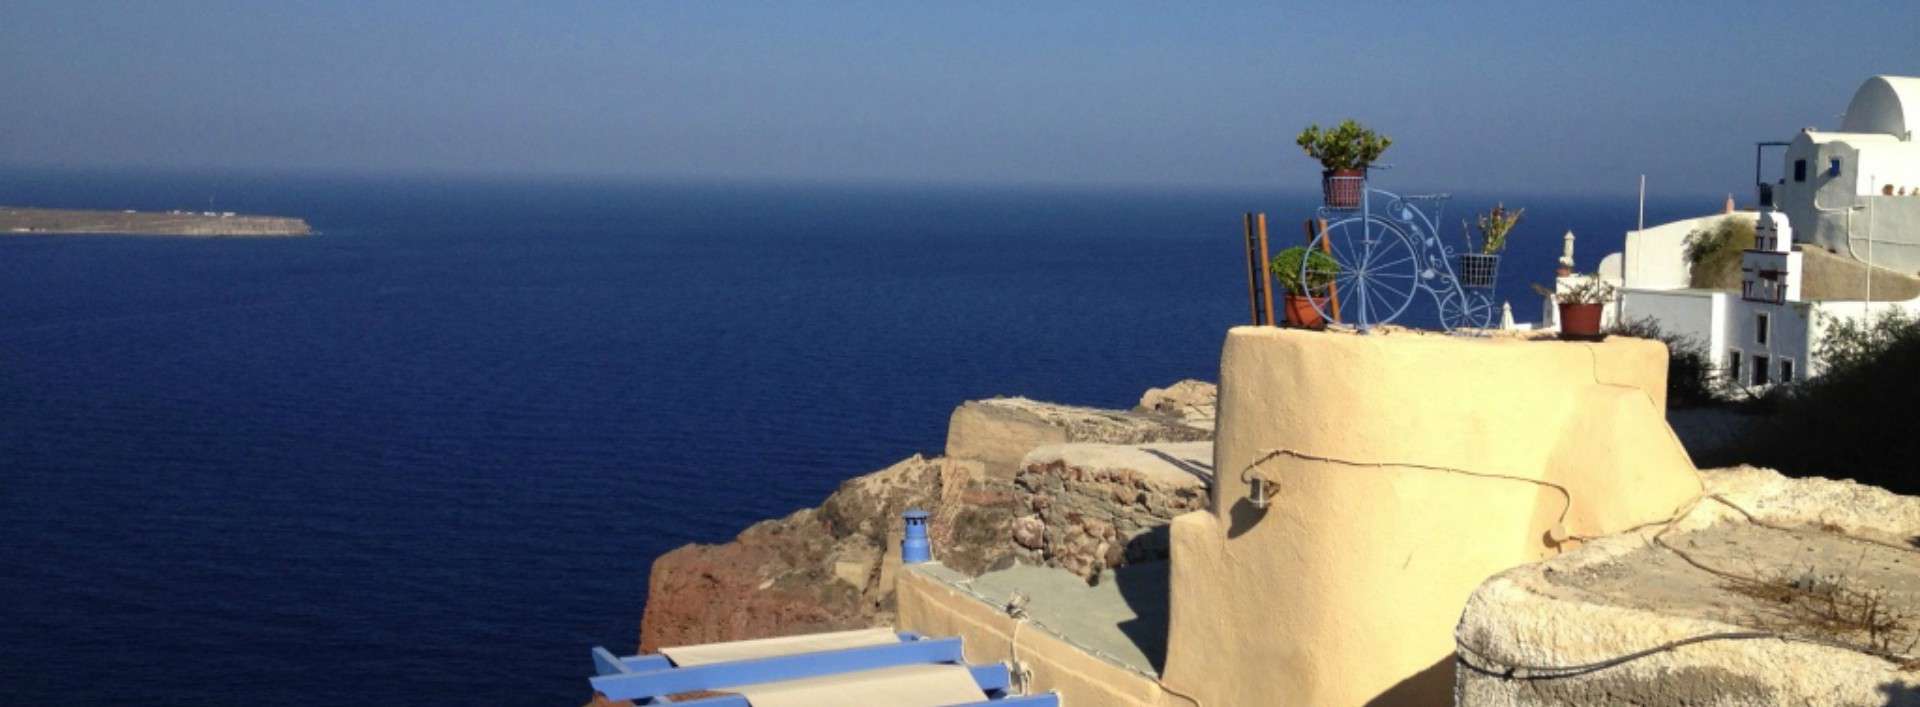 Oia, Santorini, Greece, Greek Islands, Cyclades, Honeymoon, Hotels, Restaurants